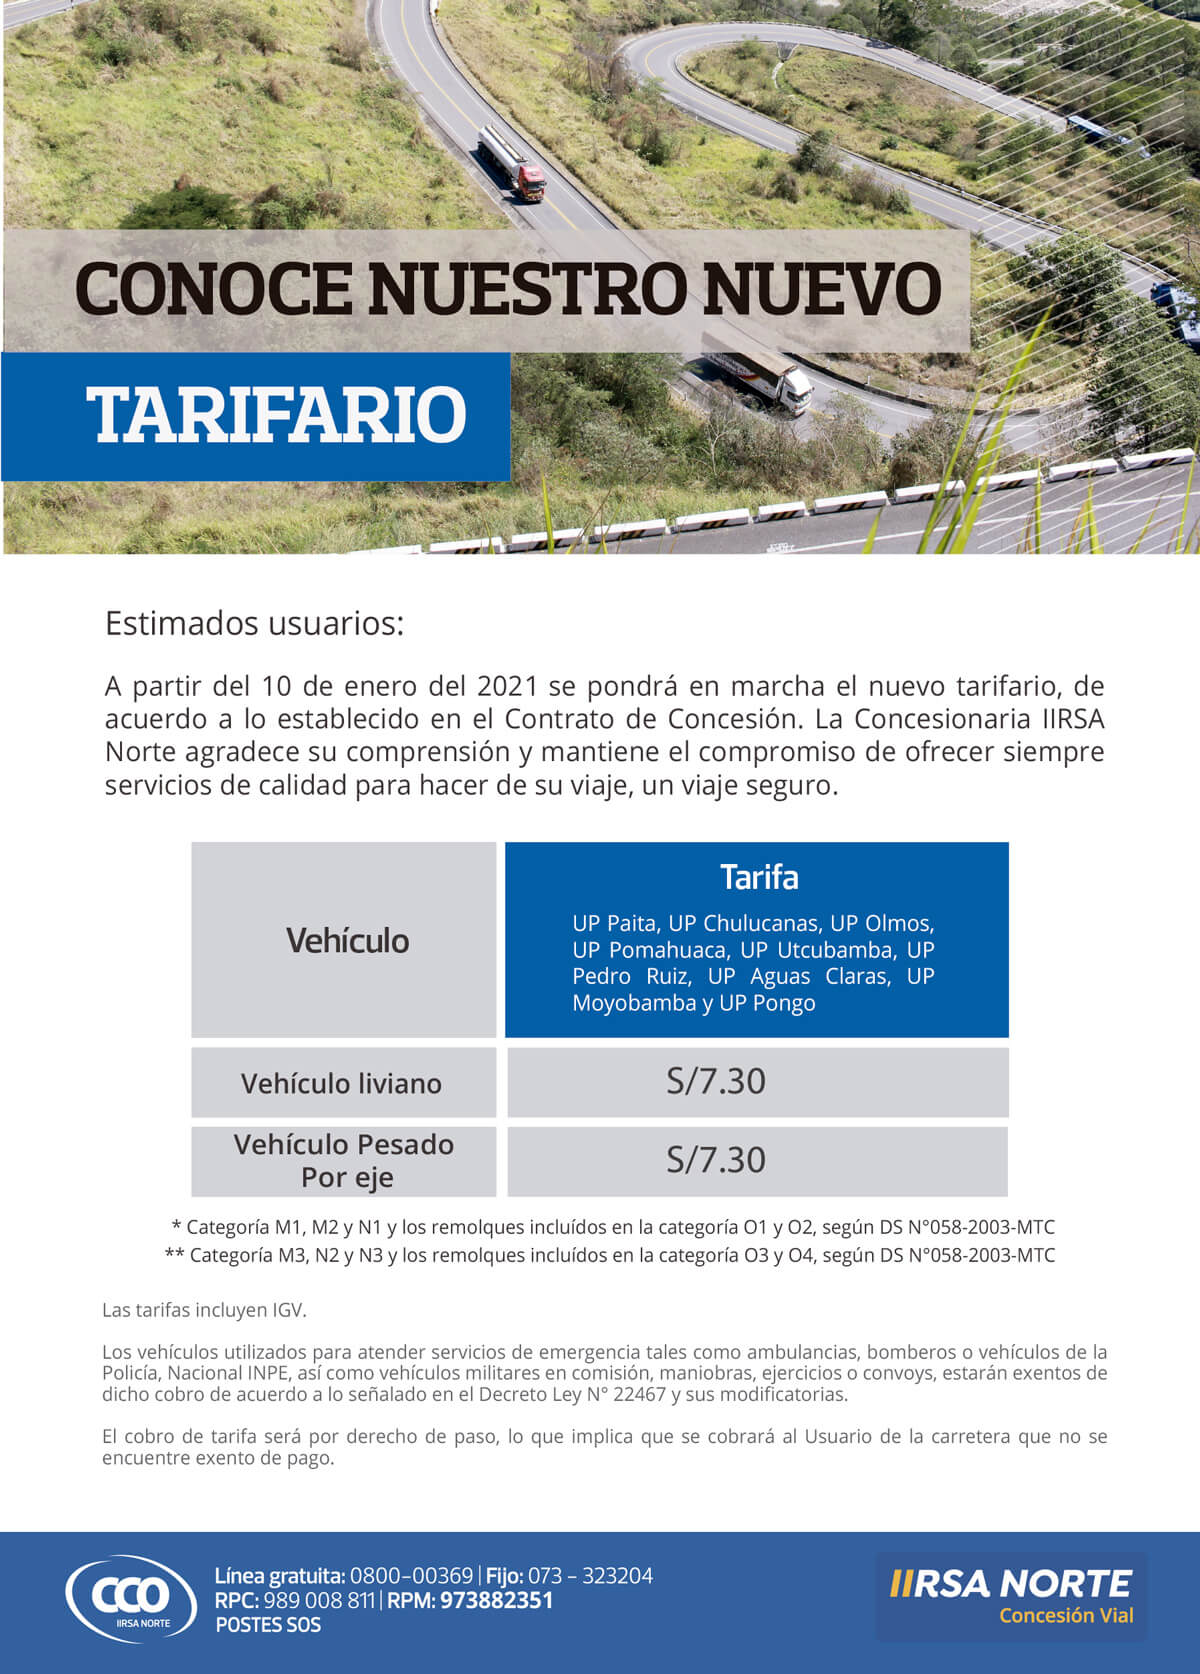 Tarifario-peajes_TARIFARIO-A5